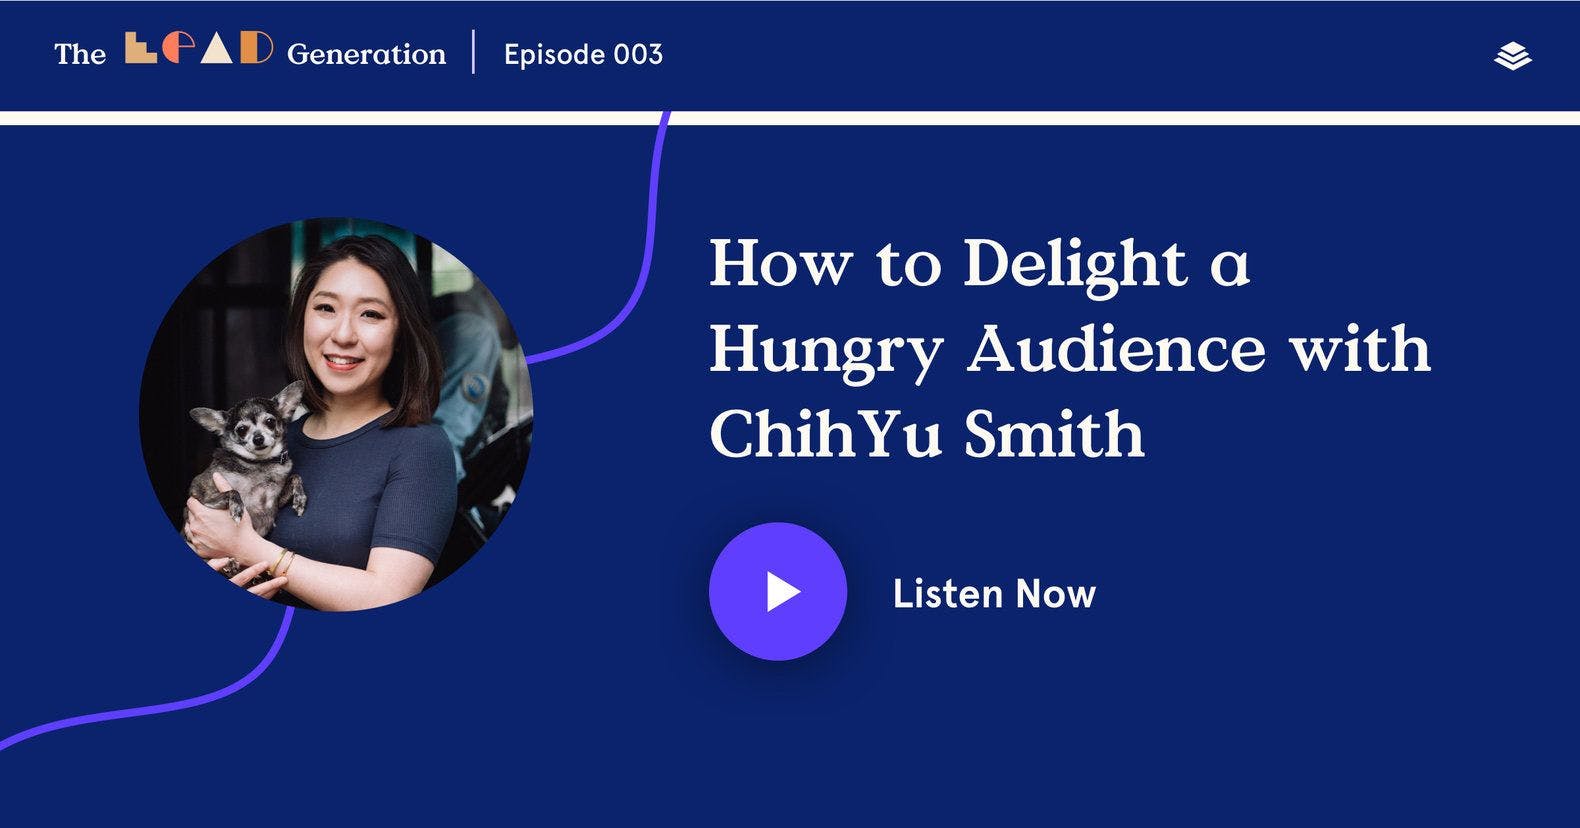 03 Chihyu Smith Tlg Podcast@2x 1